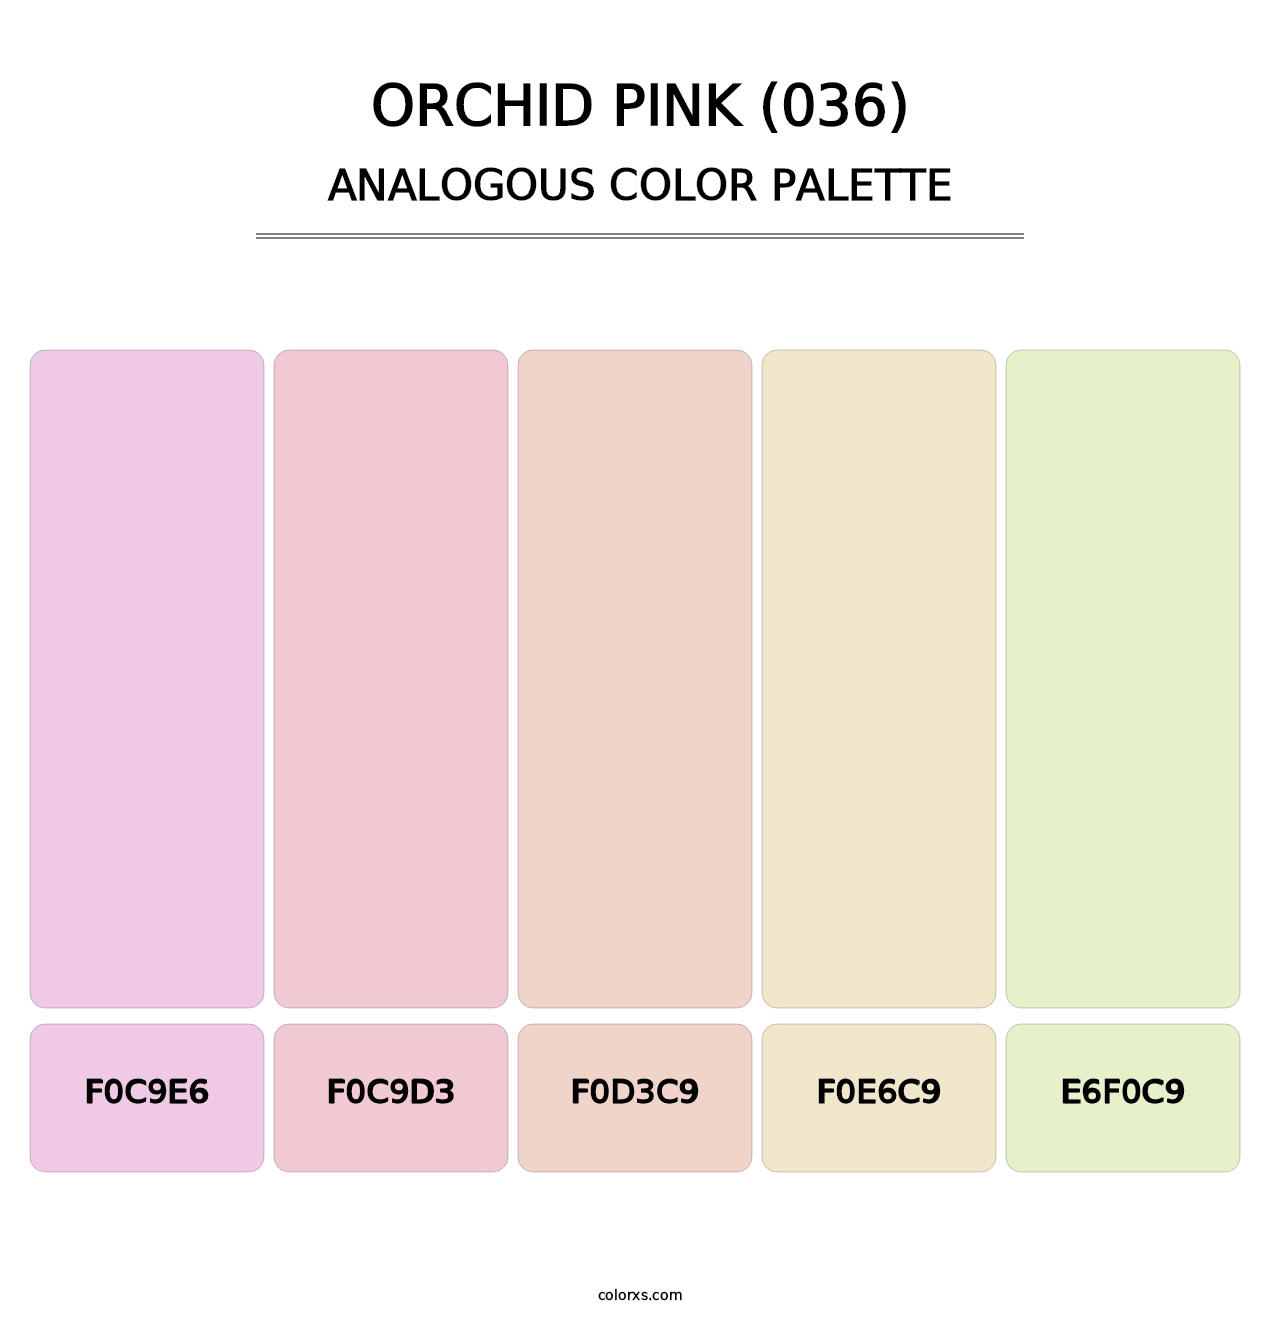 Orchid Pink (036) - Analogous Color Palette